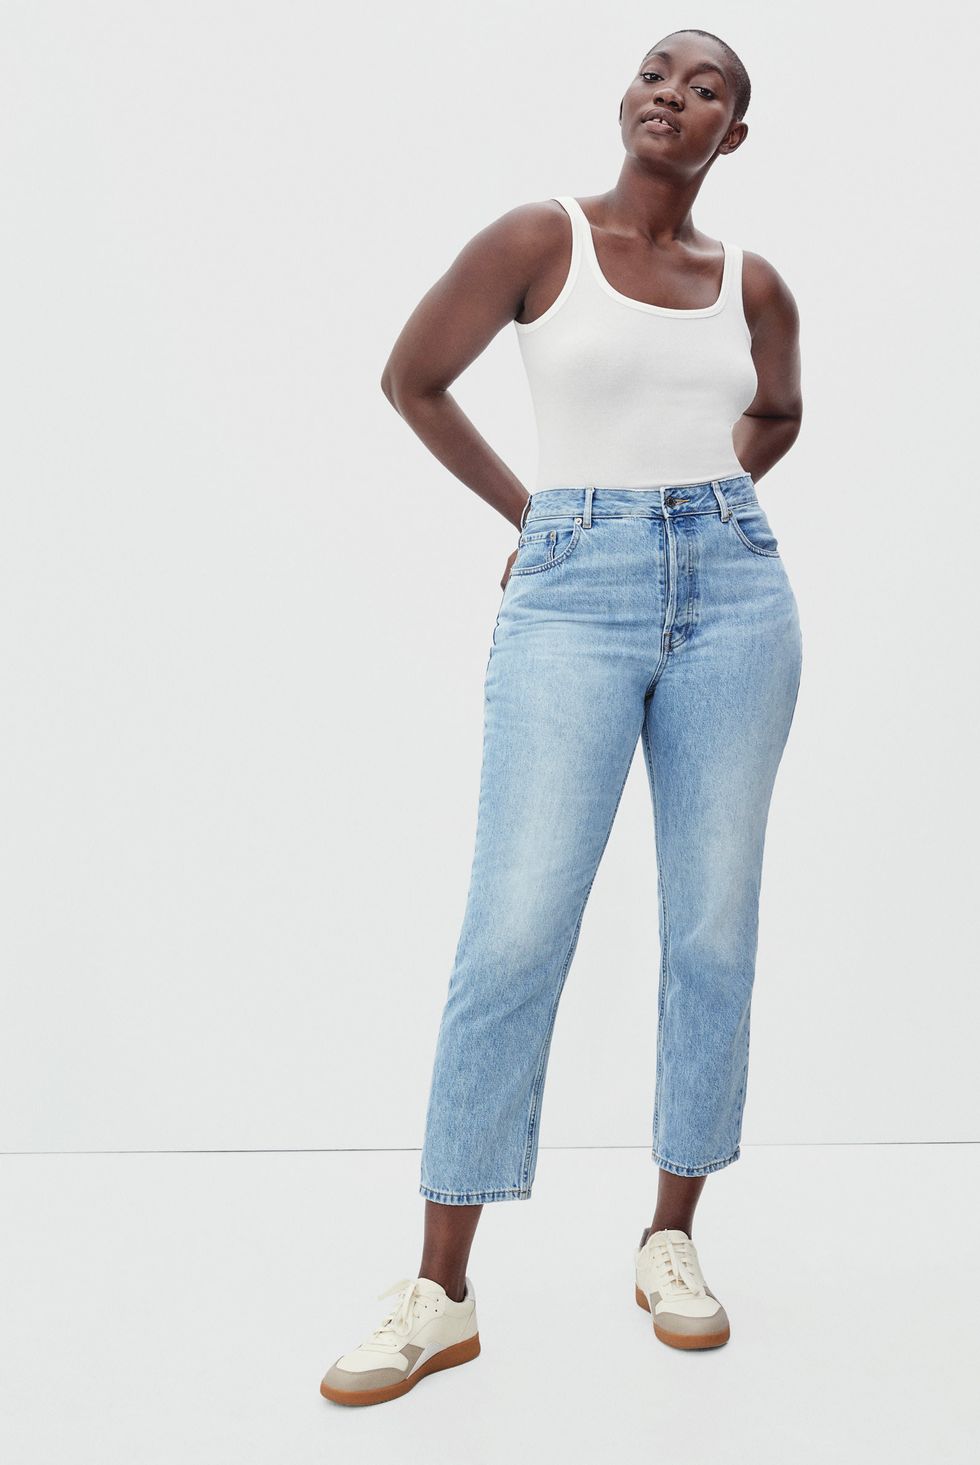 15 Best Straight-Leg Jeans of 2022: Versatile & Stylish Straight-Leg Jeans